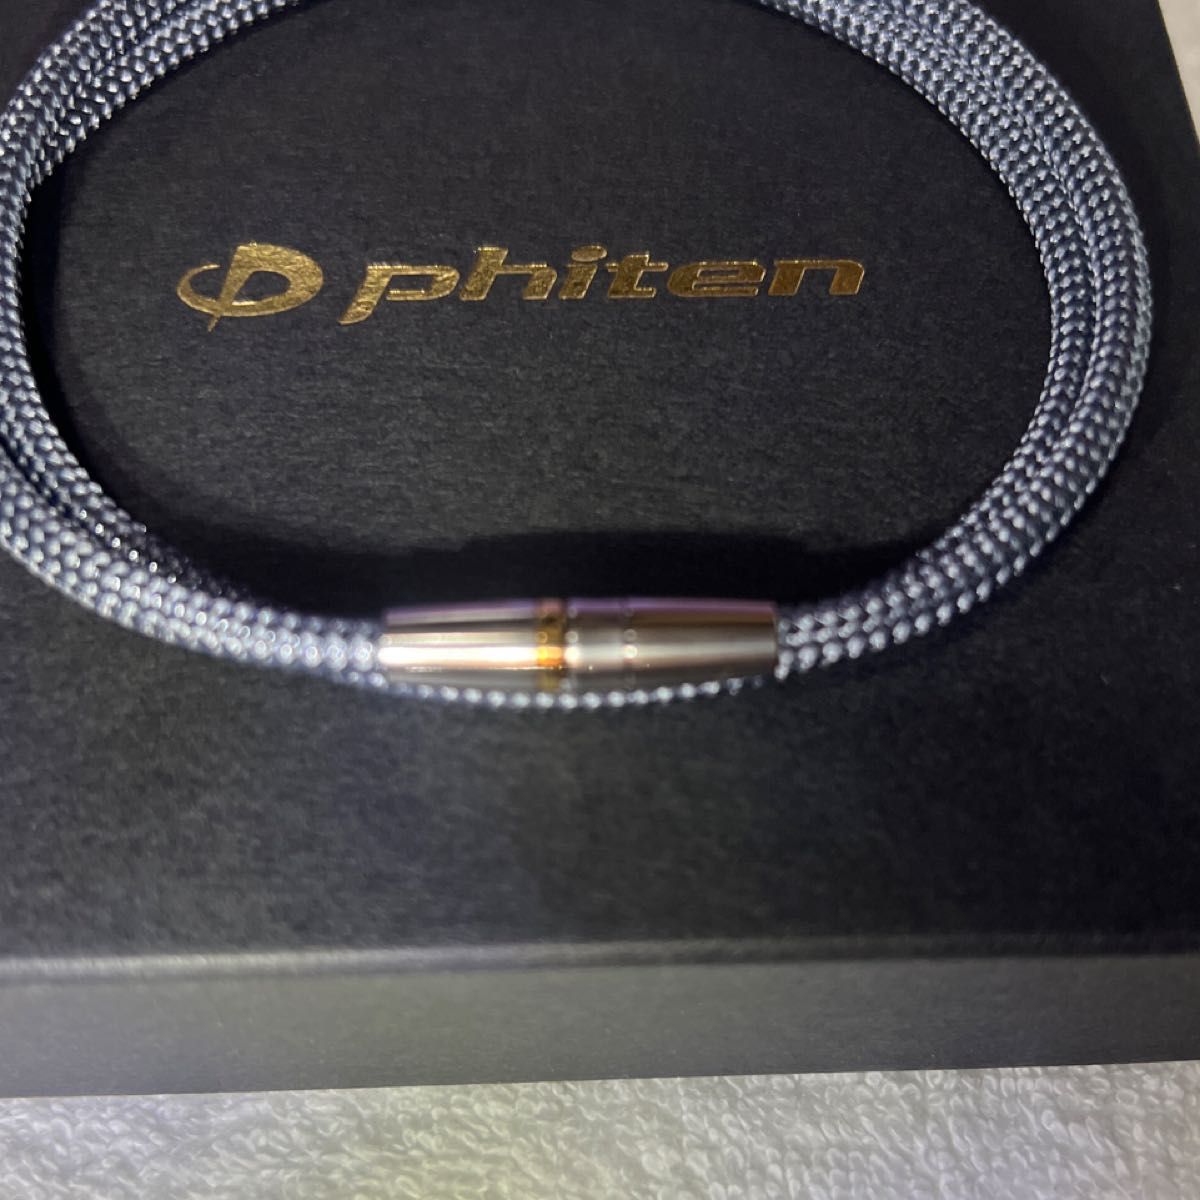 phiten (ファイテン) ネックレス RAKUWA磁気チタンネックレス メタルトップ グレー/シルバー